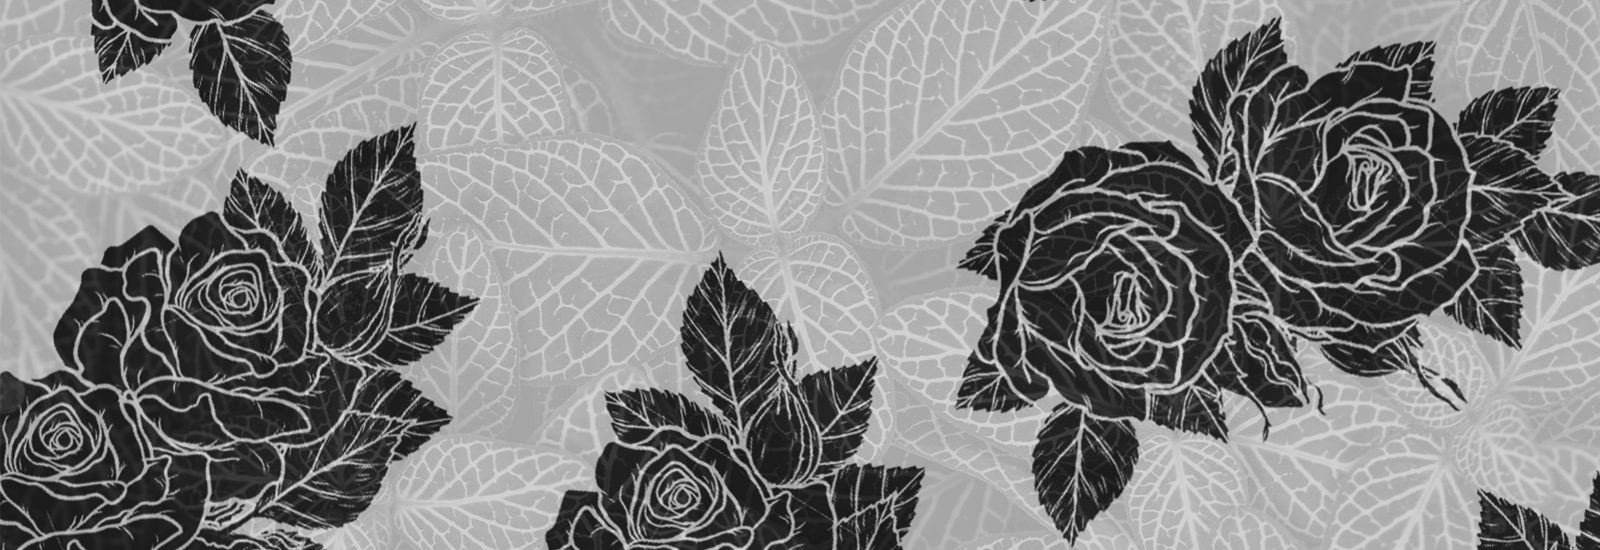 black floral background for twitter